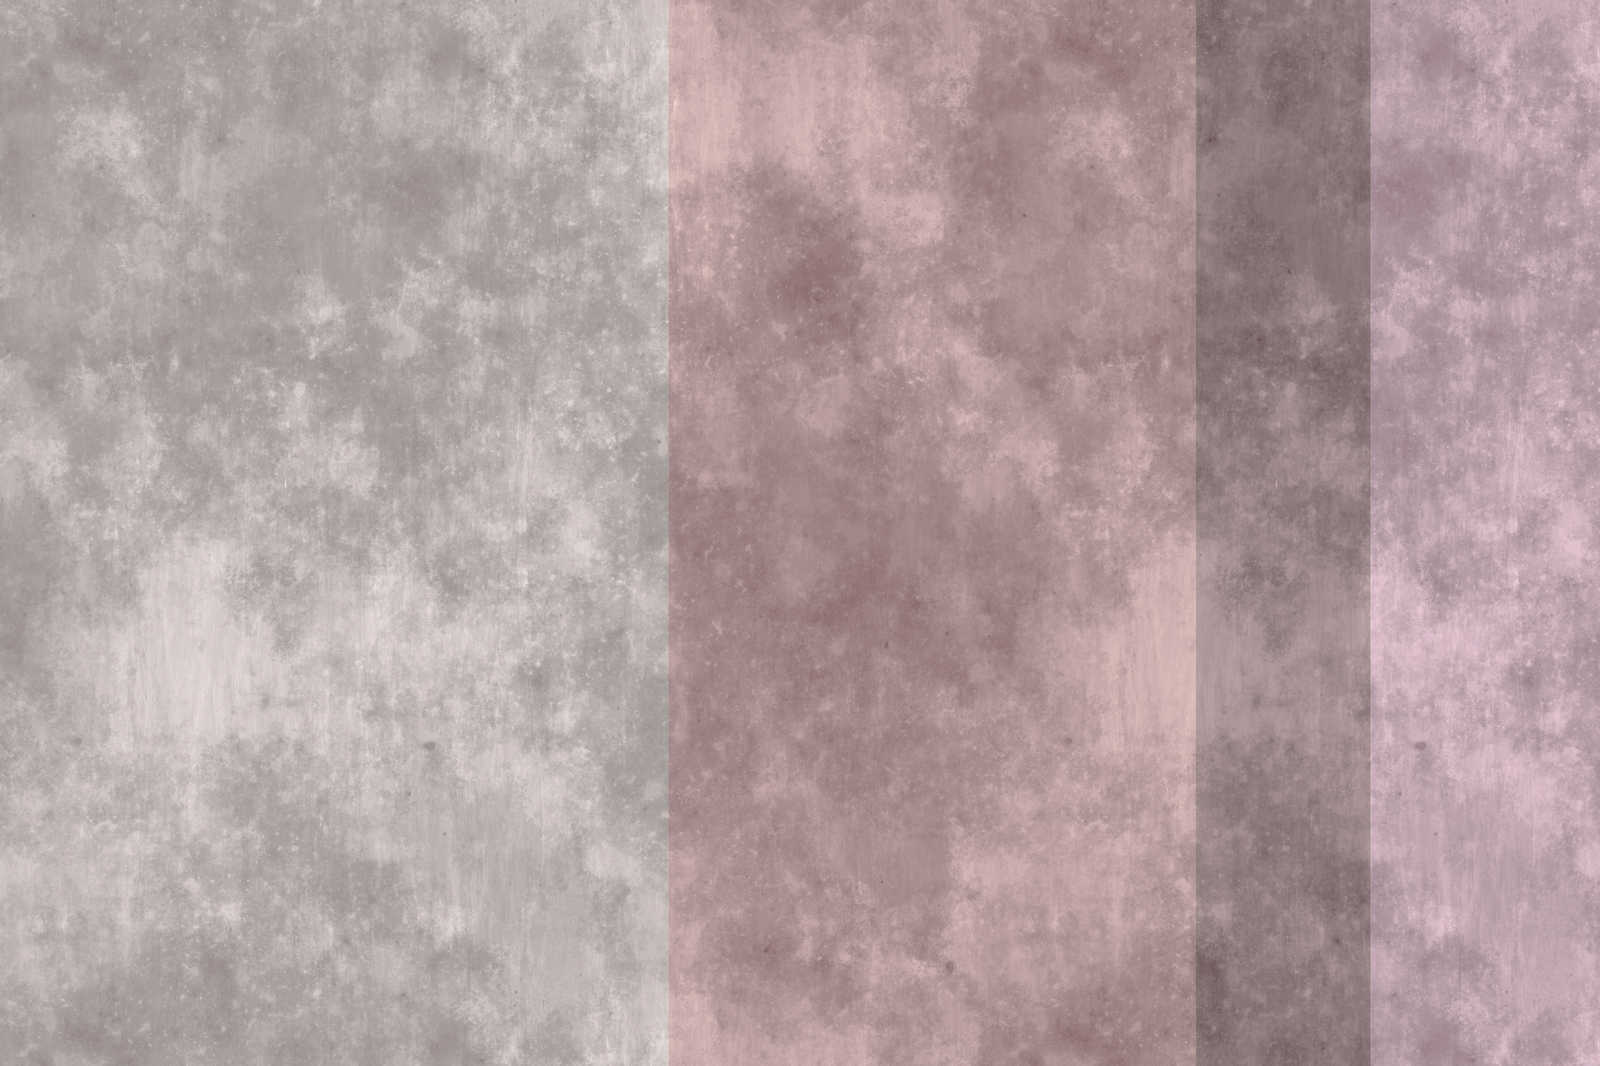             Betonoptik Leinwandbild mit Streifen | grau, rosa – 0,90 m x 0,60 m
        